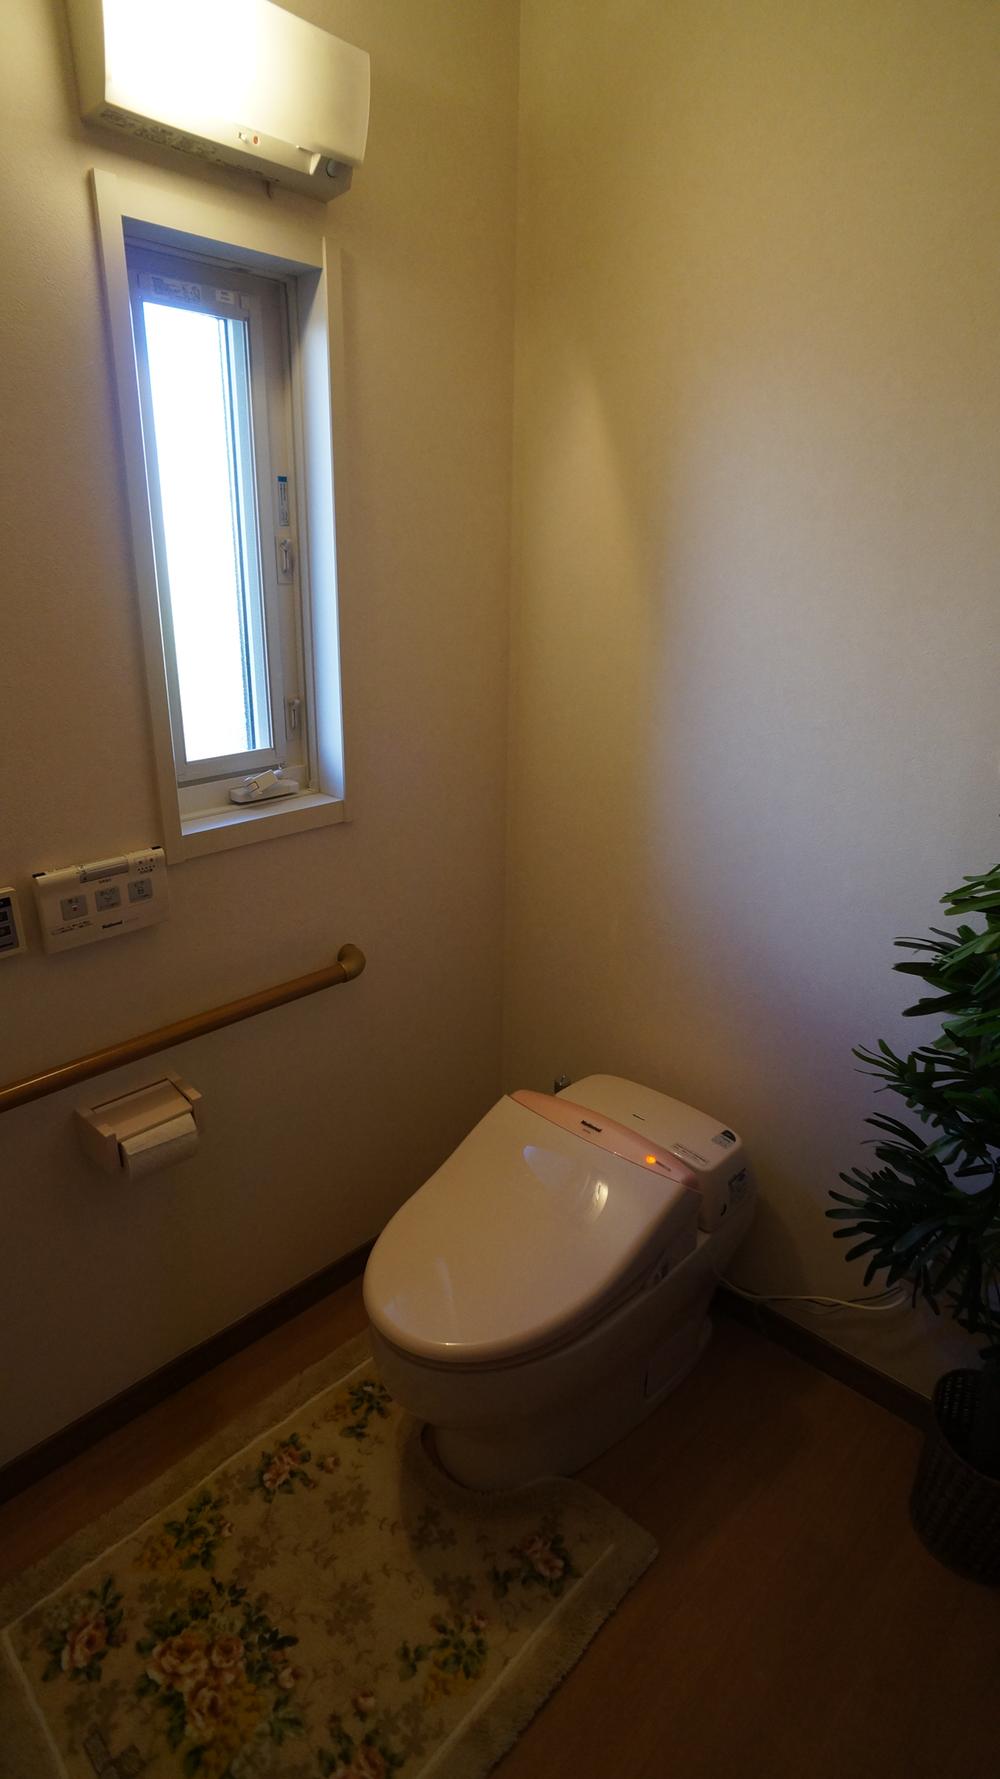 Toilet. First floor toilet space